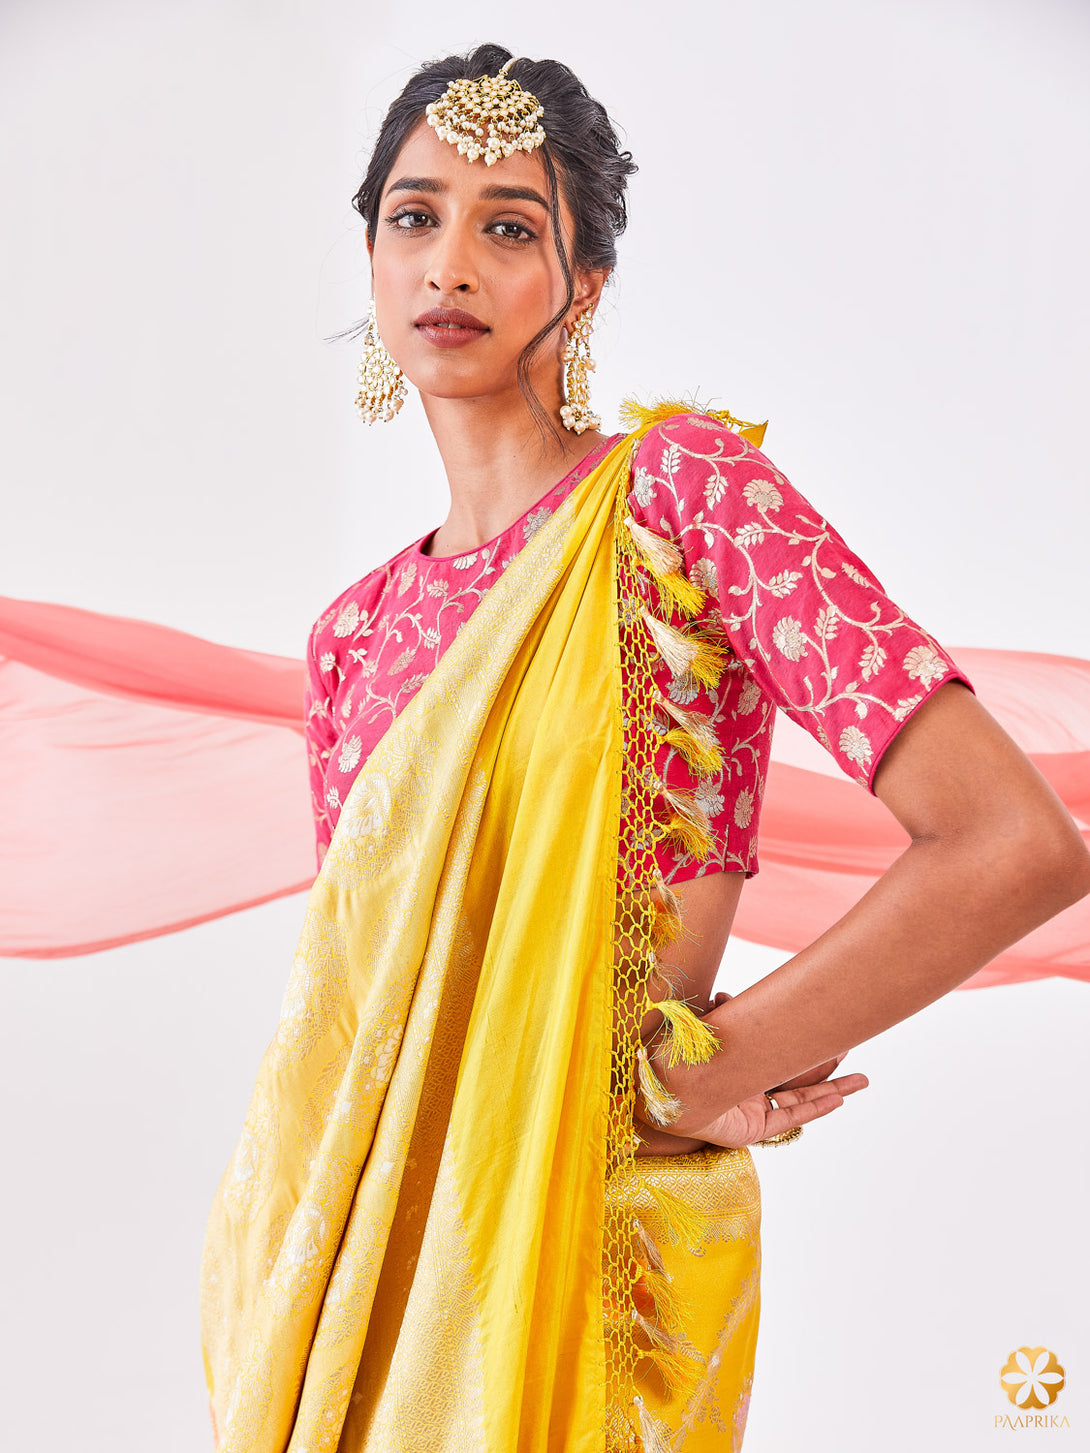 Beautiful Drape of Luxurious Pastel Yellow Banarasi Saree - Timeless Beauty and Elegance.